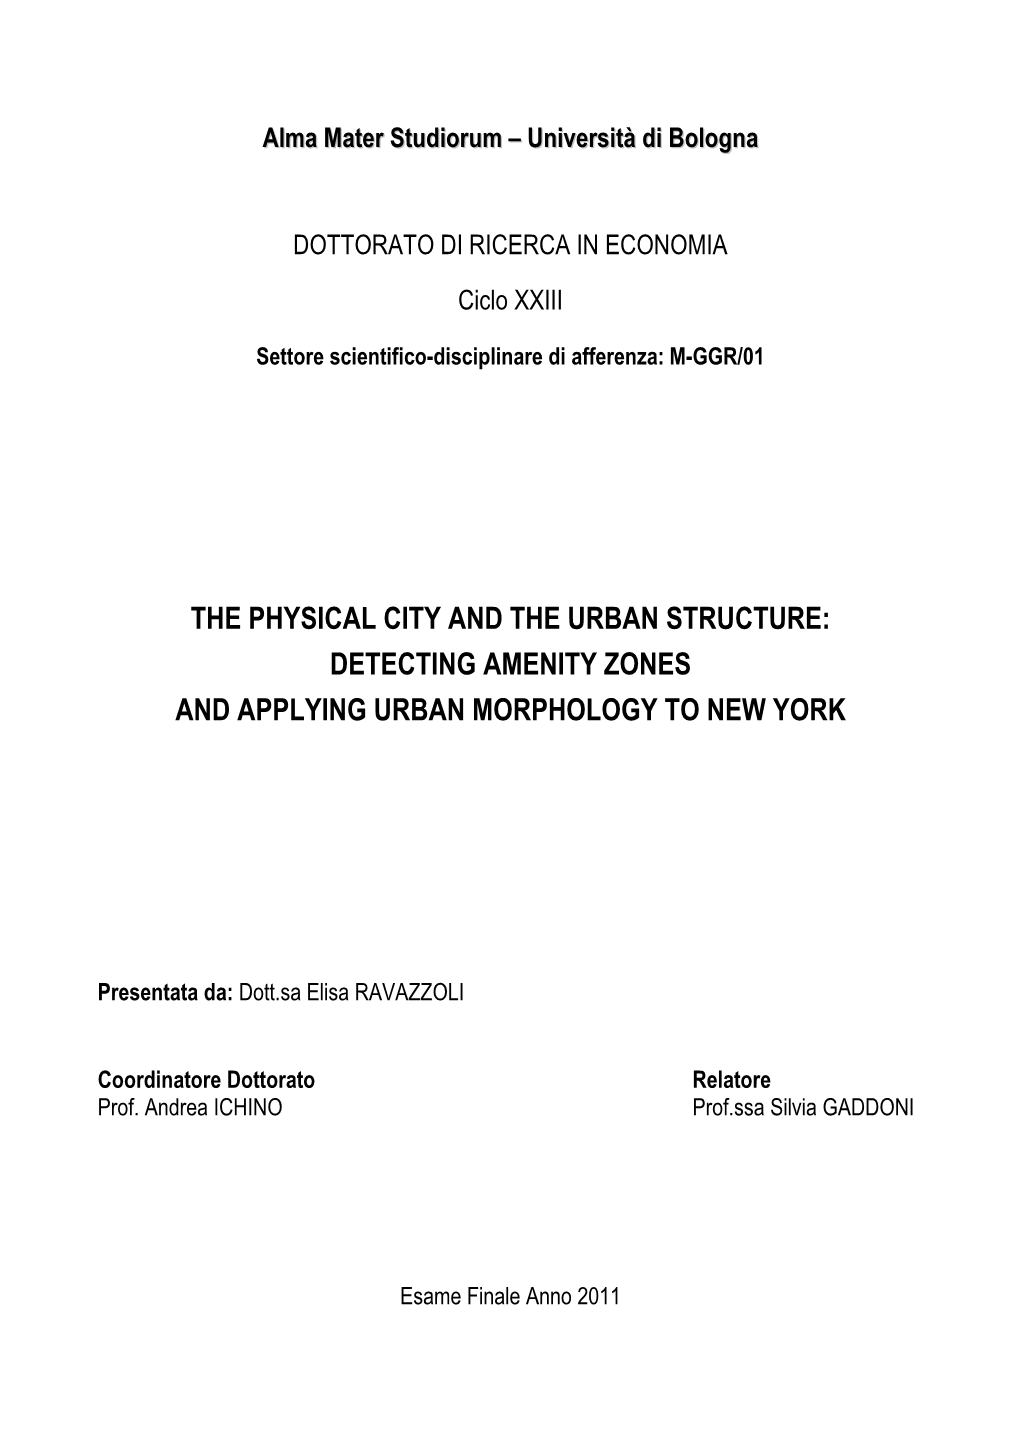 Detecting Amenity Zones and Applying Urban Morphology to New York